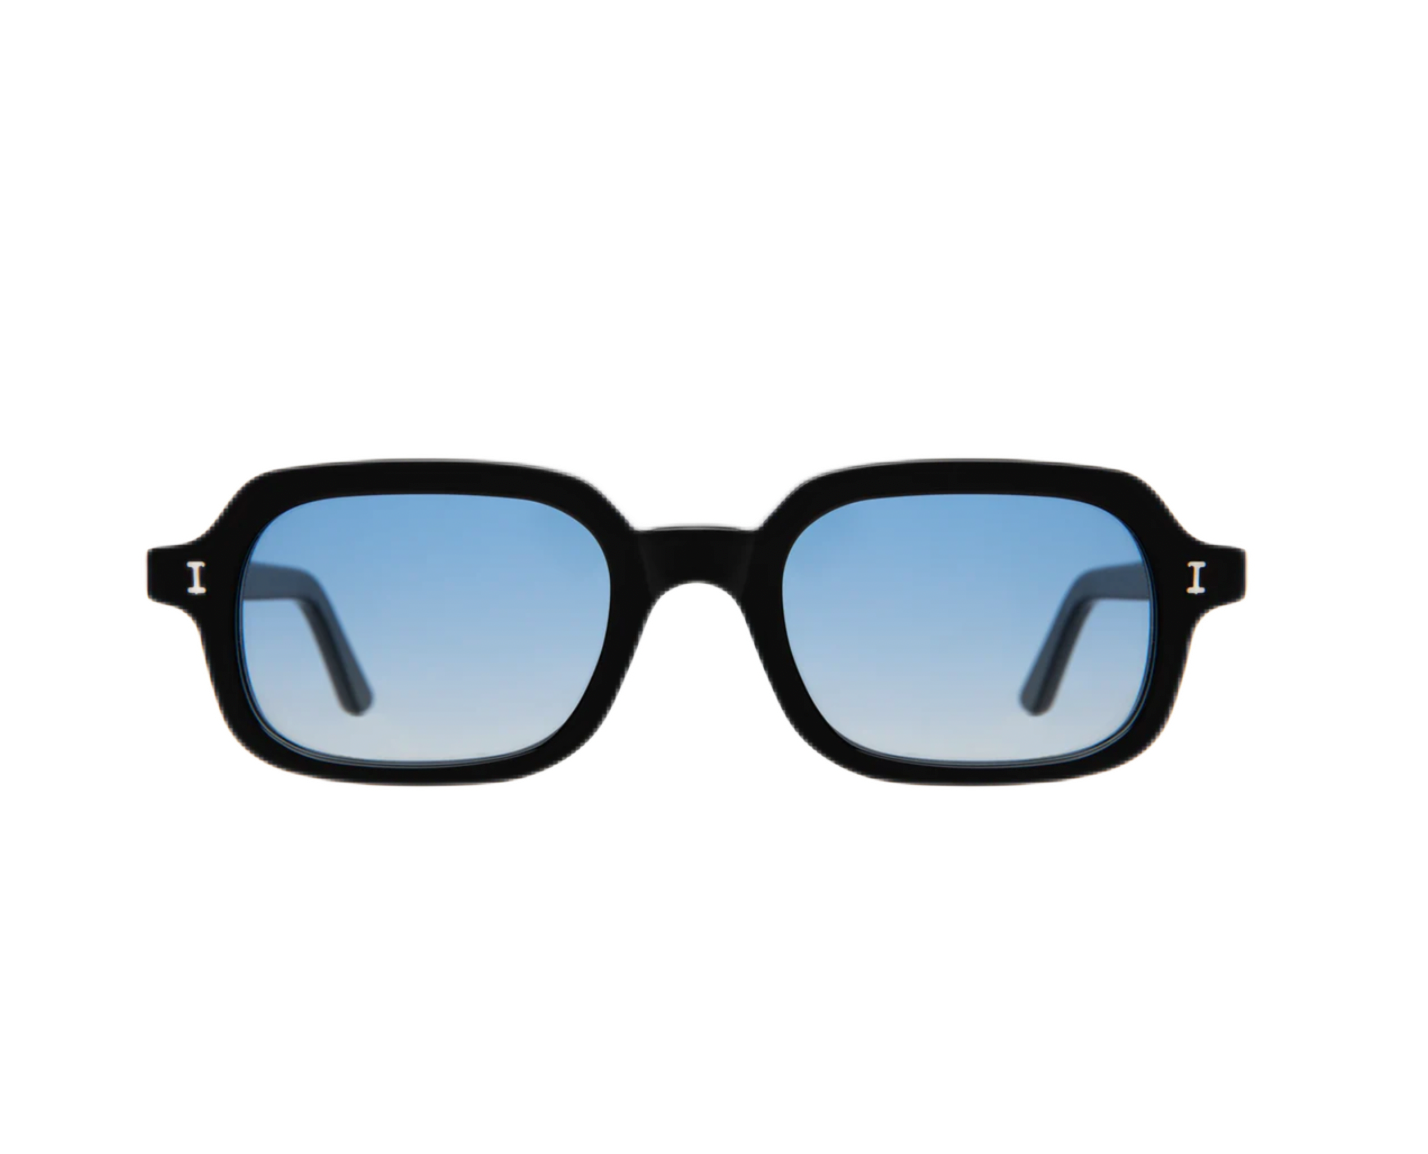 Berlin Sunglasses Black/Blue Gradient